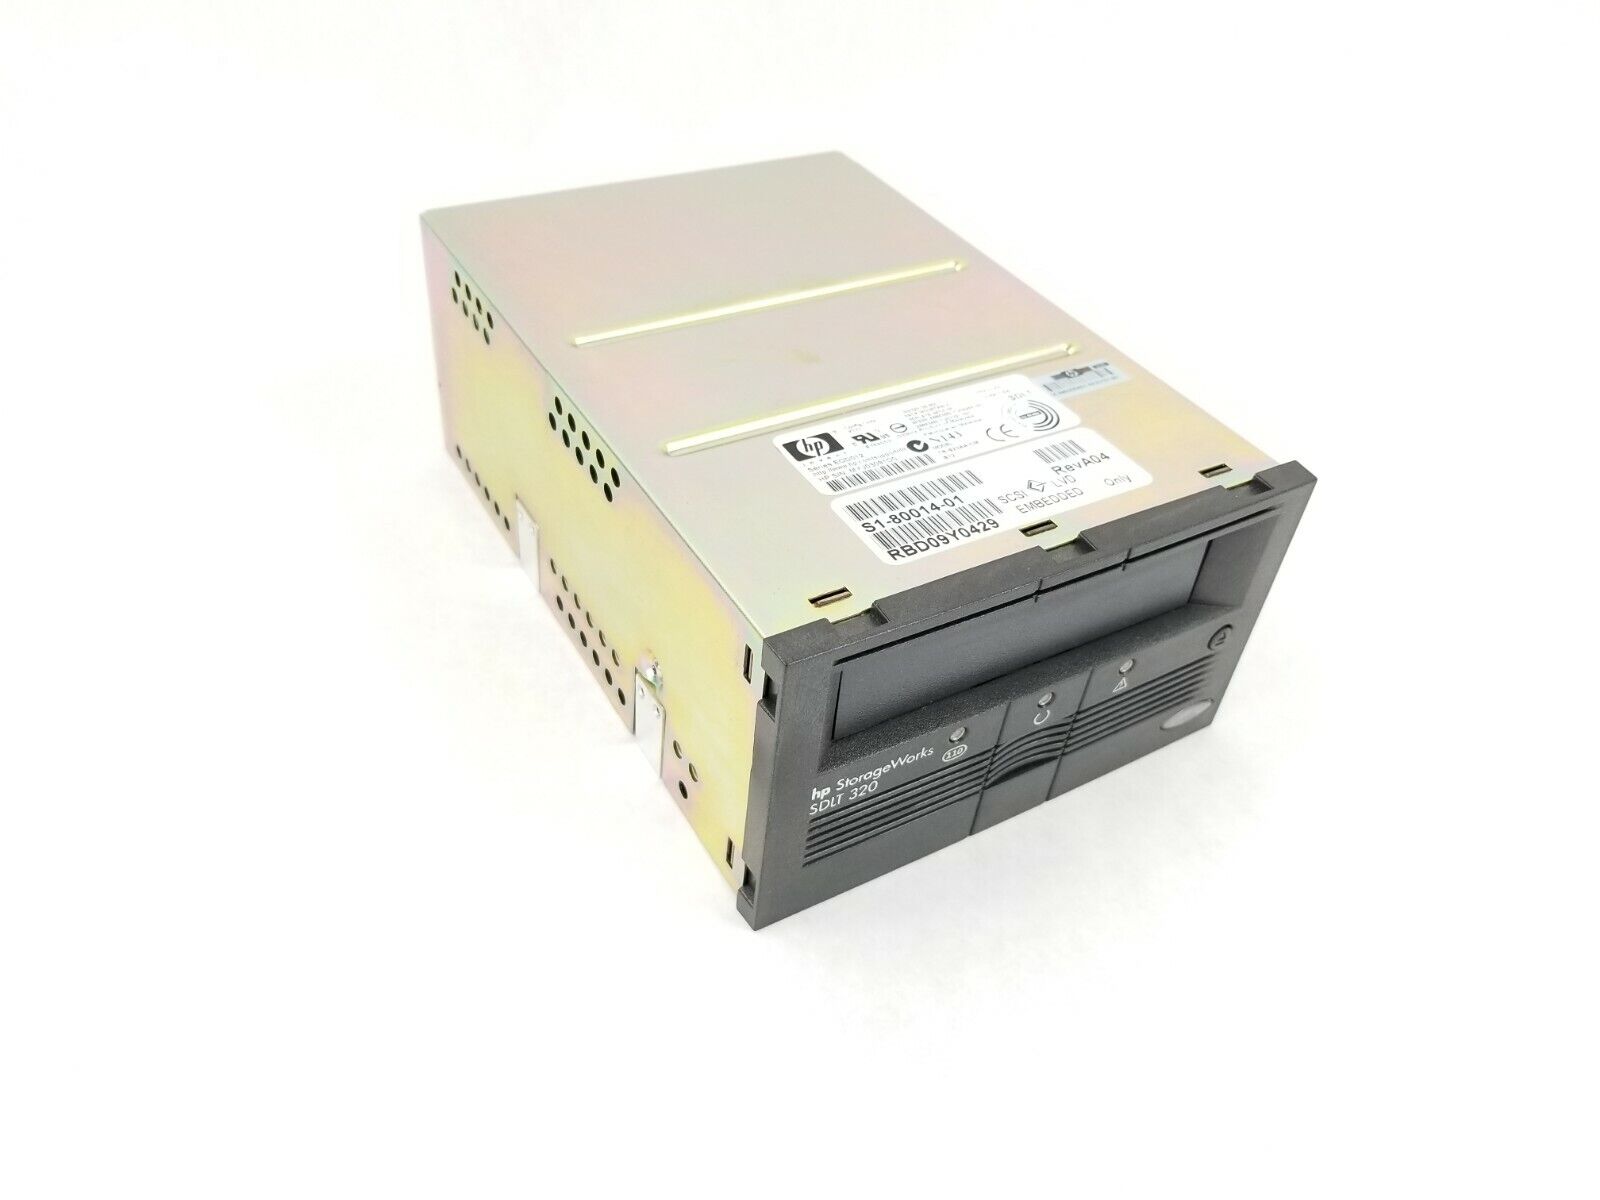 HP Storage Works SDLT 320 S1-80014-01